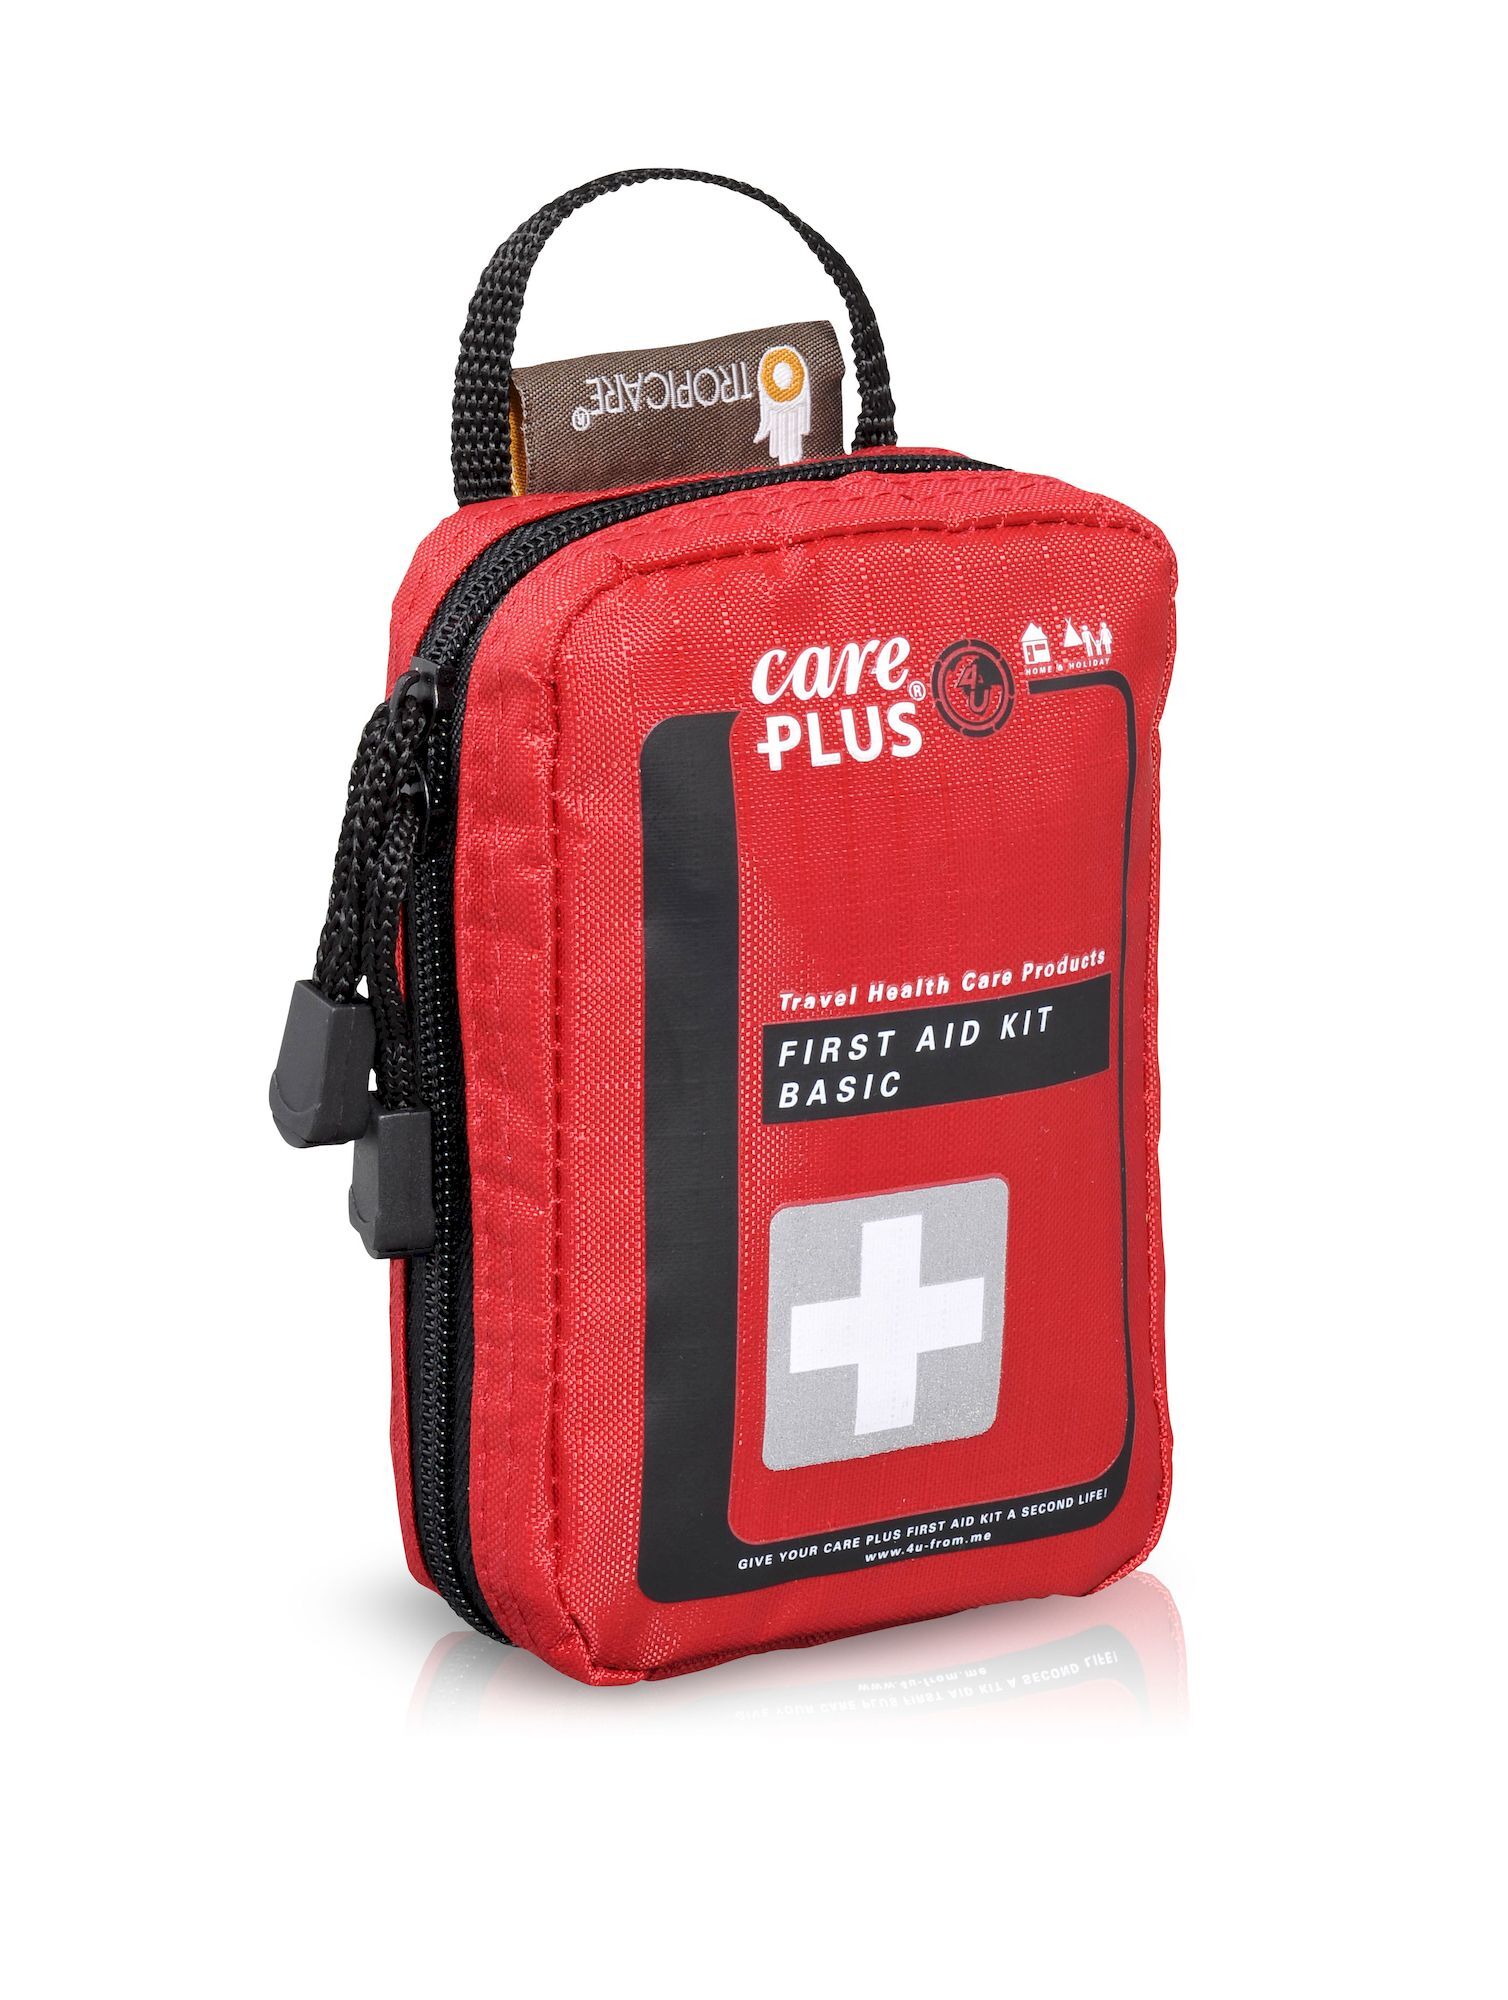 Care Plus First Aid Kit Basic - Kit pronto soccorso